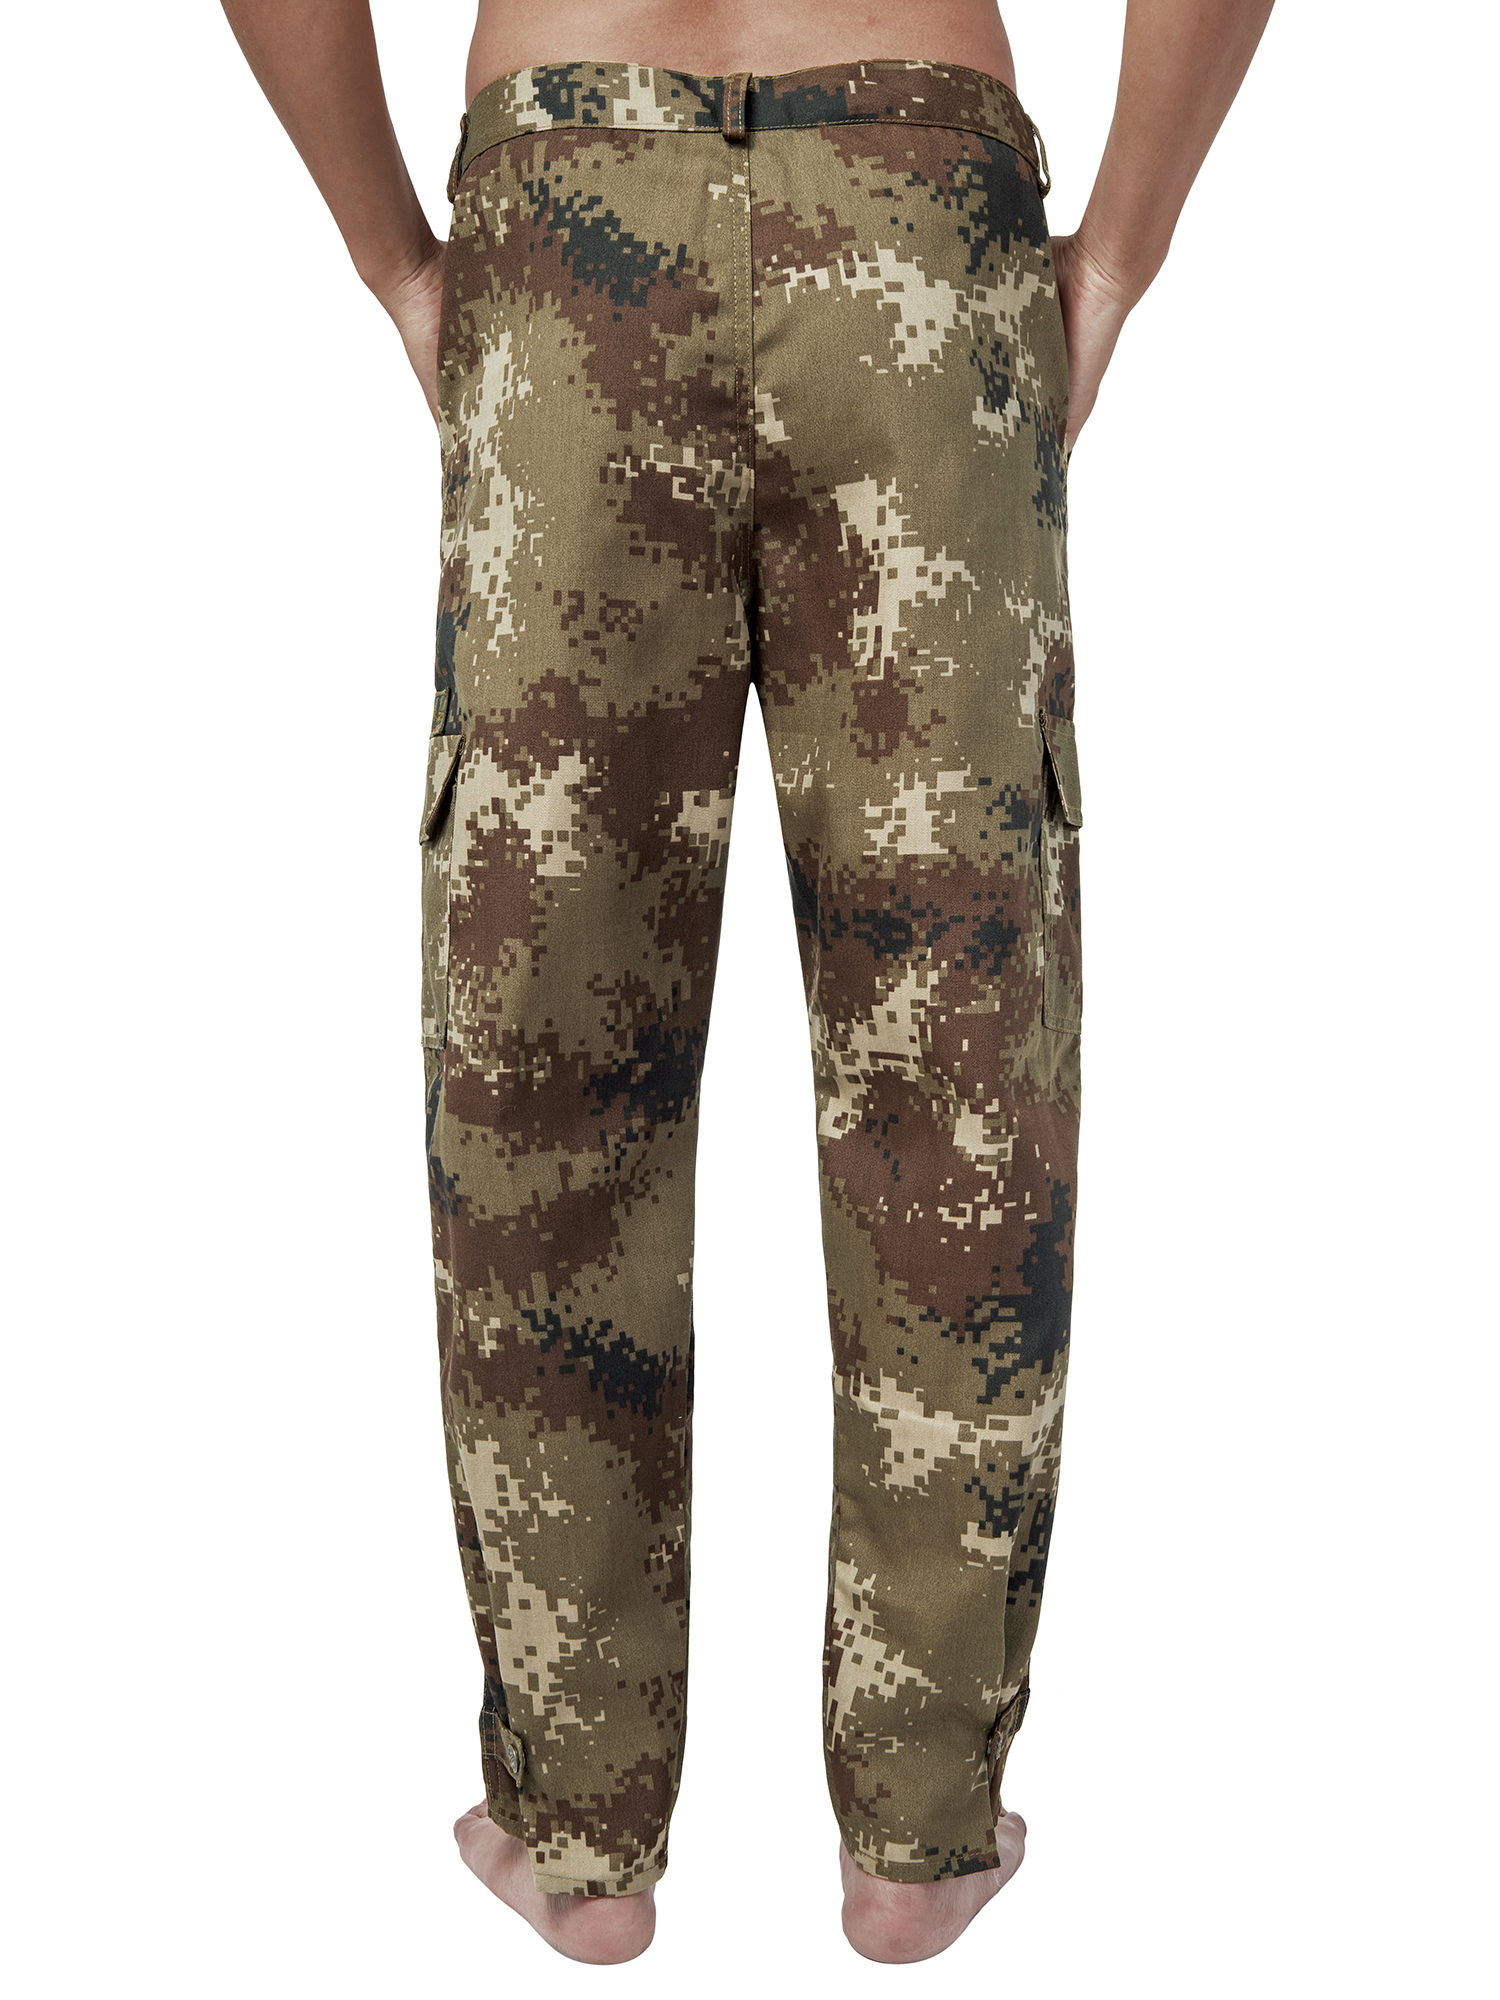 FOCUSSEXY Men Comfort Cargo Pant Tactical Combat Cargo Pocket Long Pants Work Wear Casual Bottoms Outdoor Camo Stretch Cargo Pants - image 4 of 7